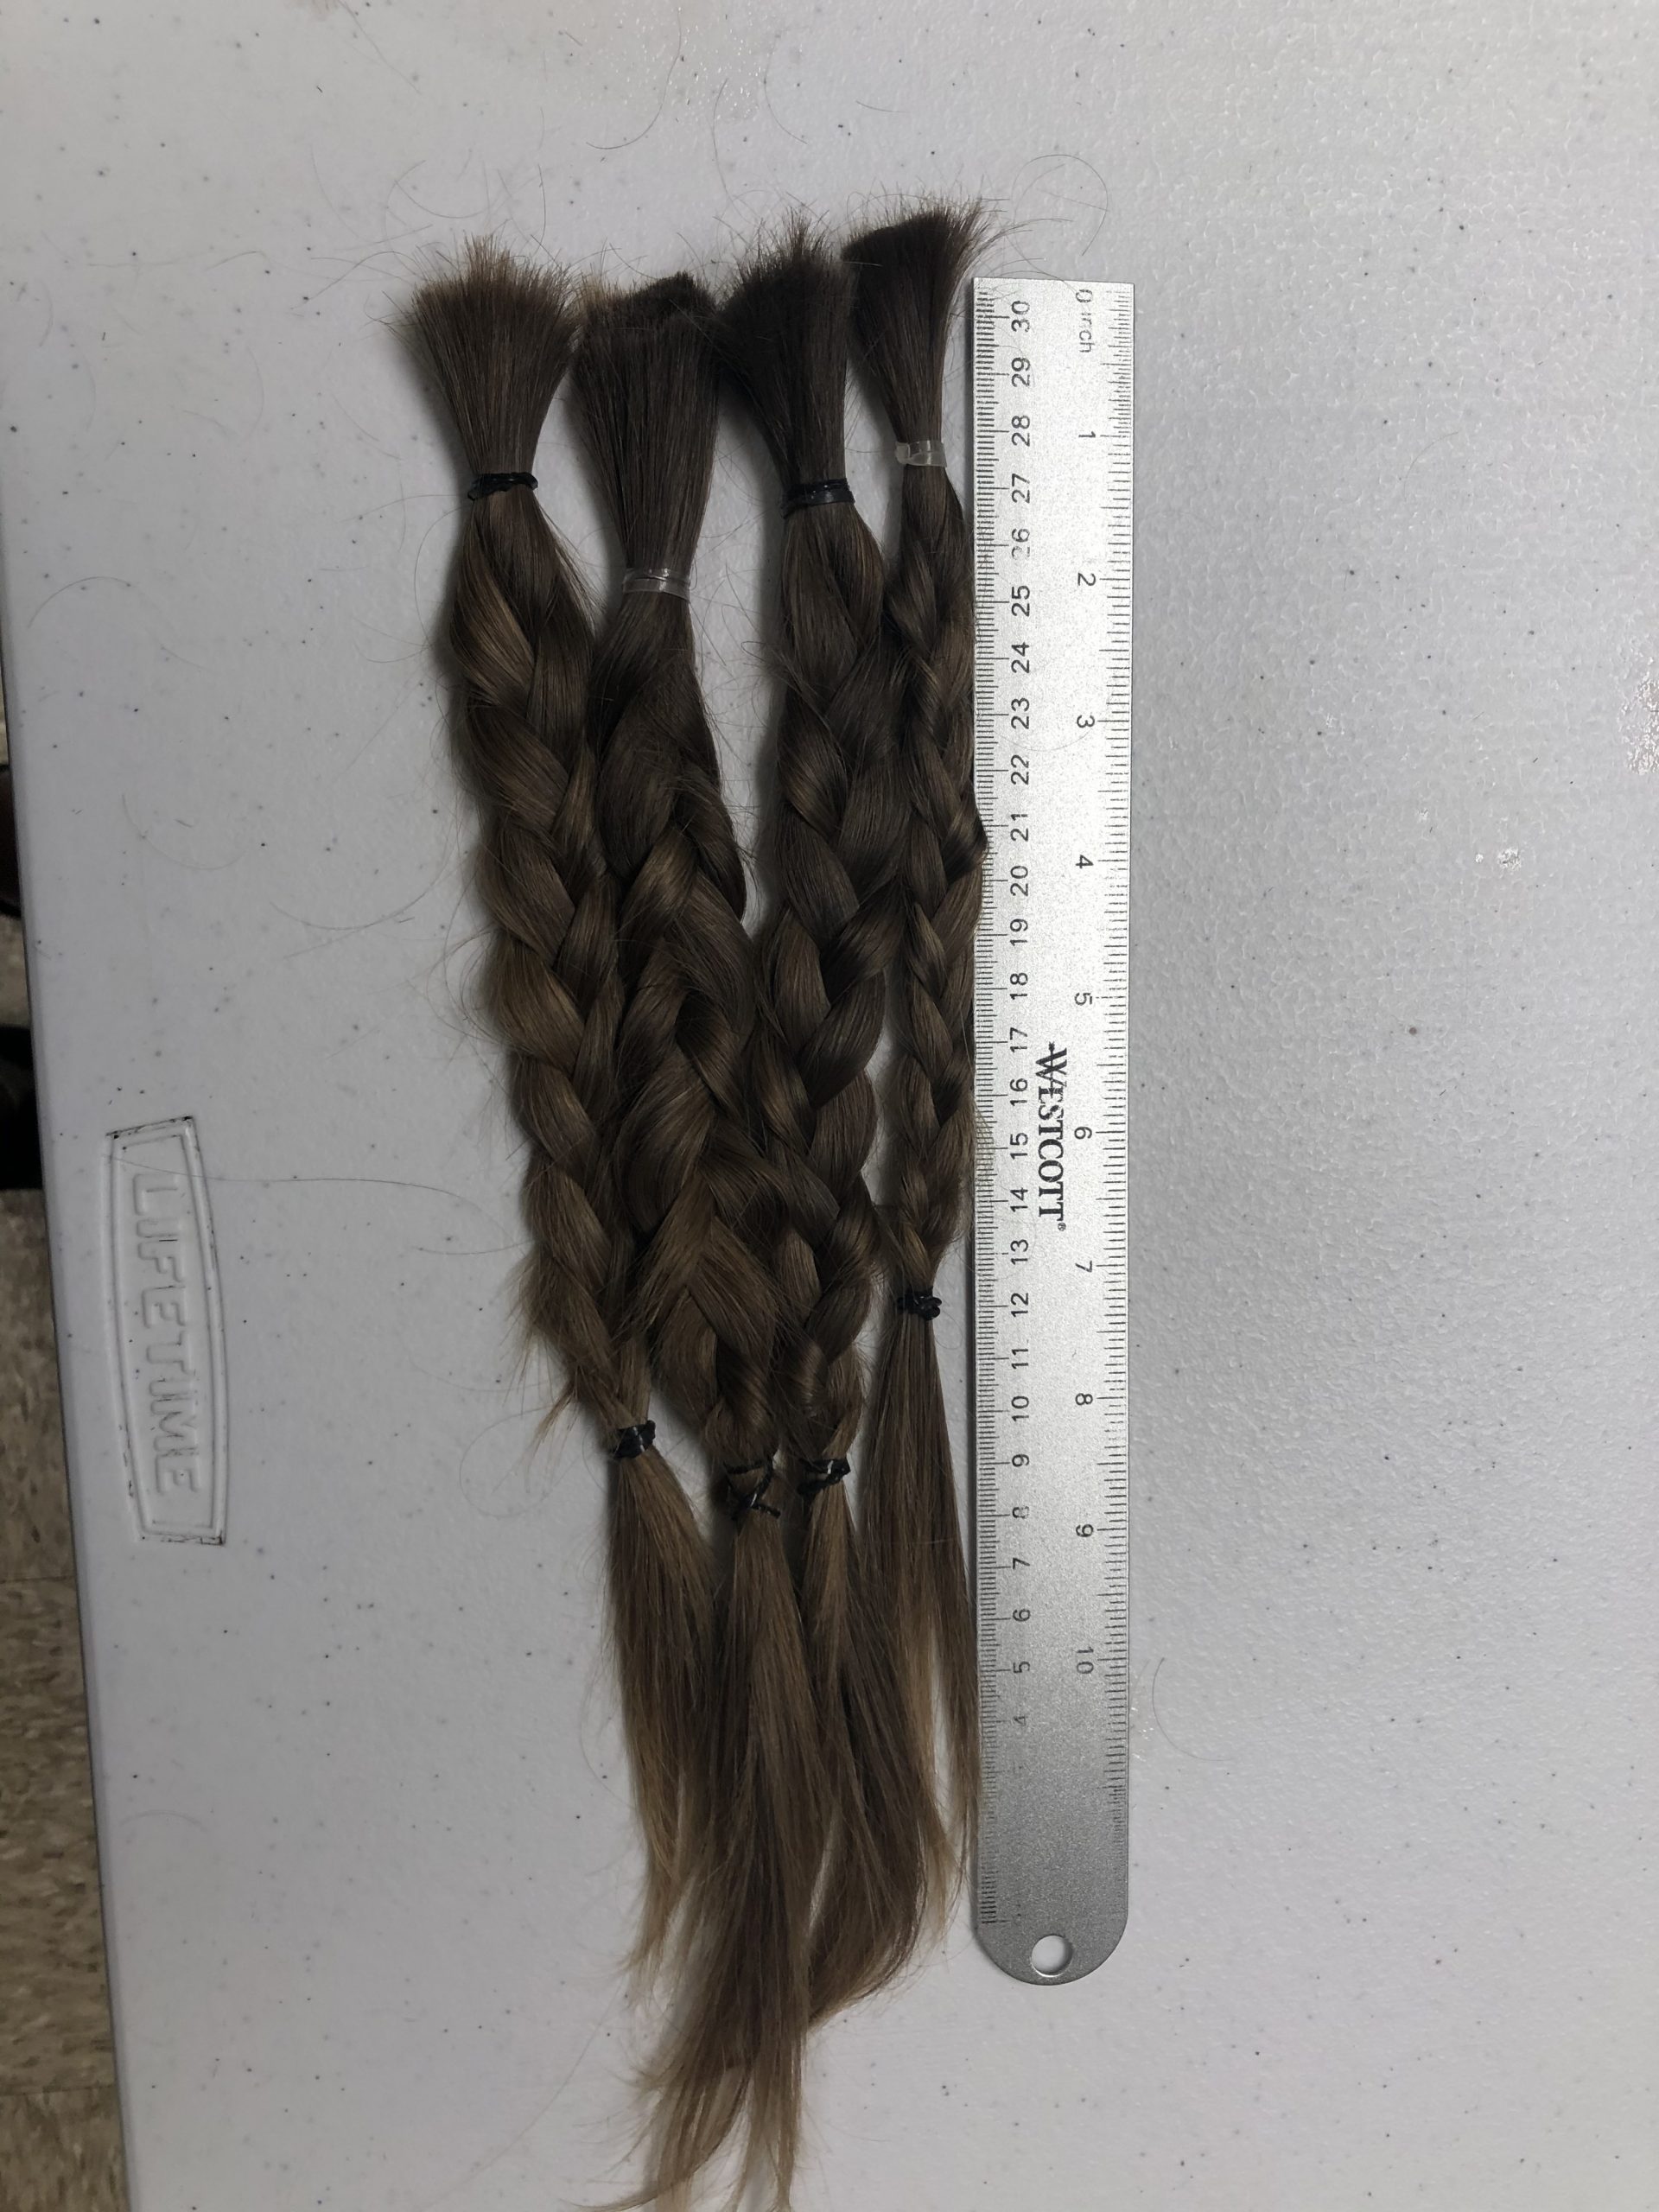 14-15 inches of blonde virgin hair